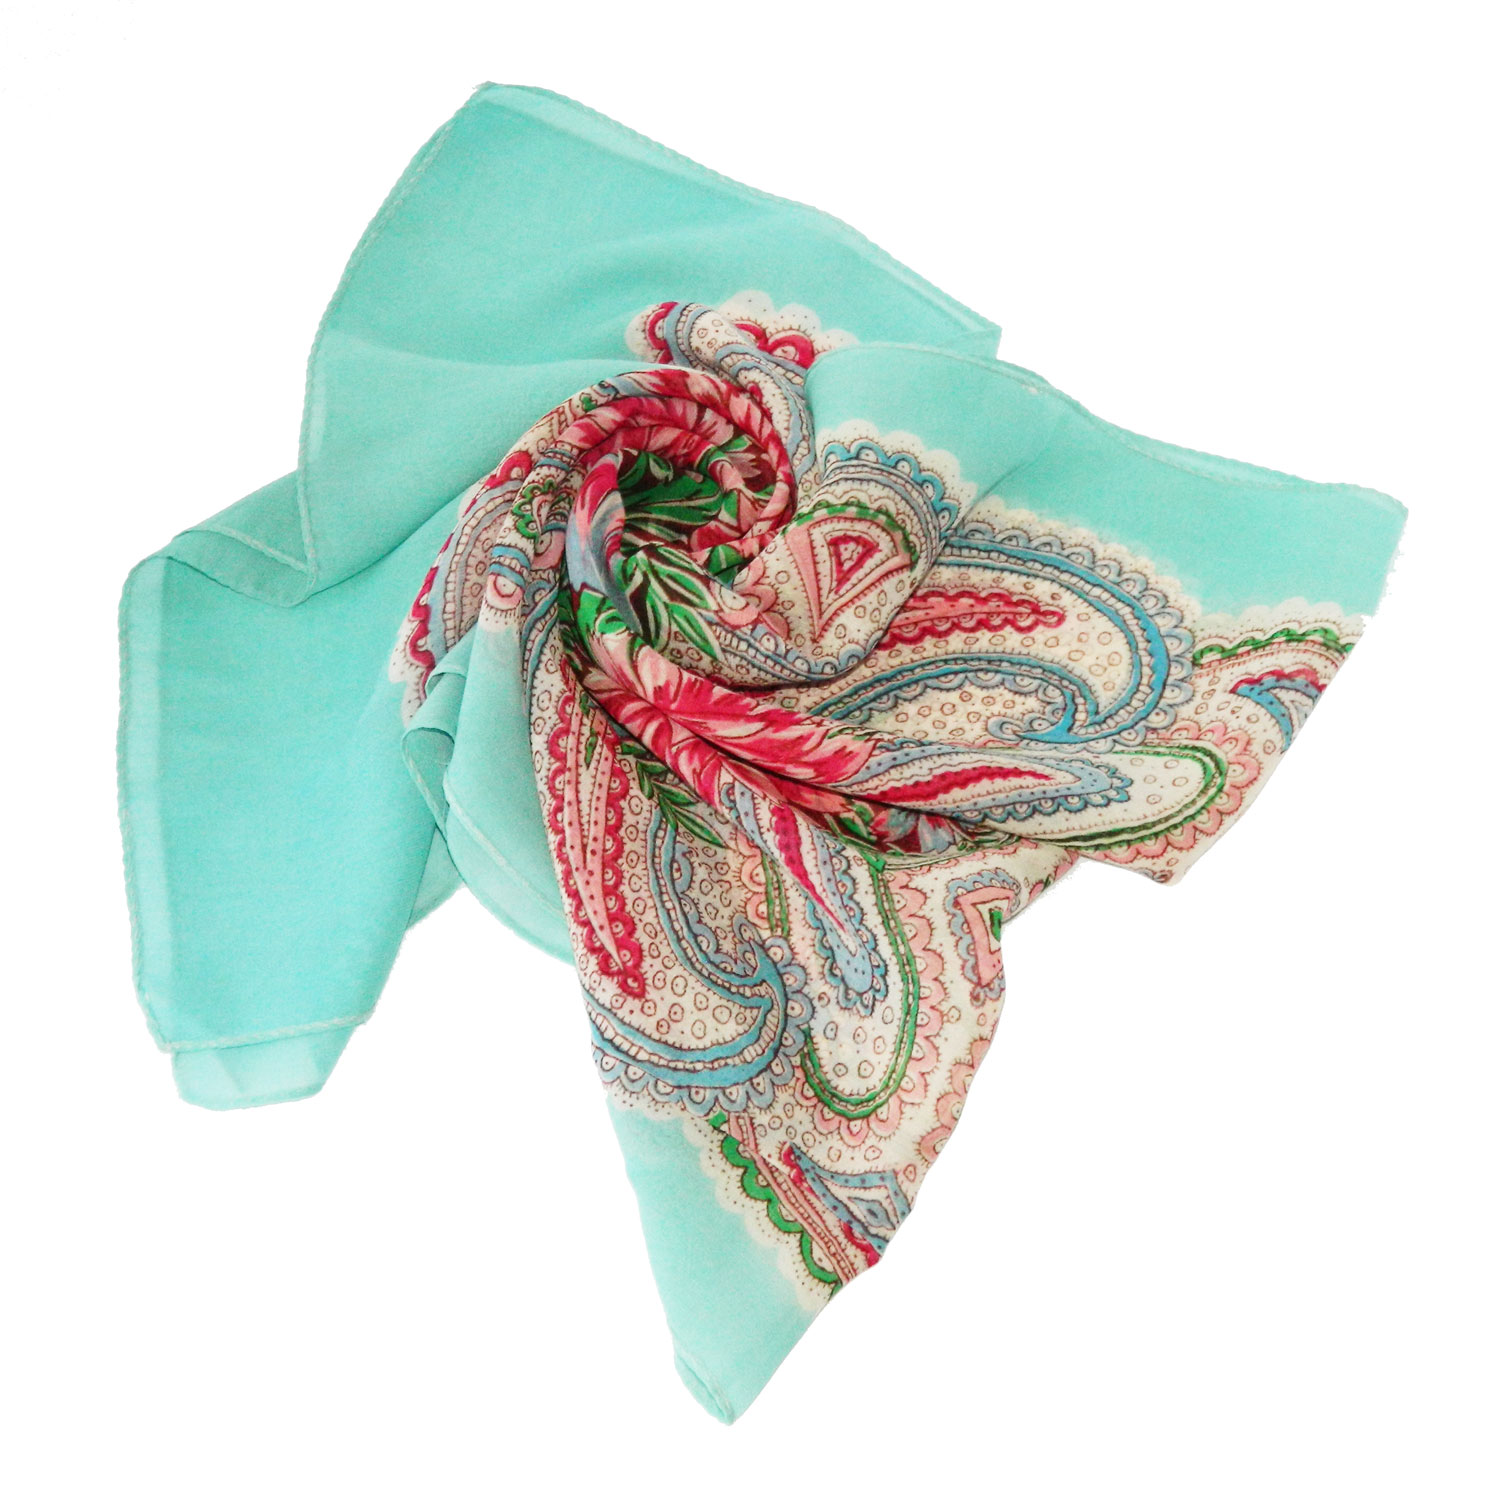 Vintage rayon crepe paisley scarf